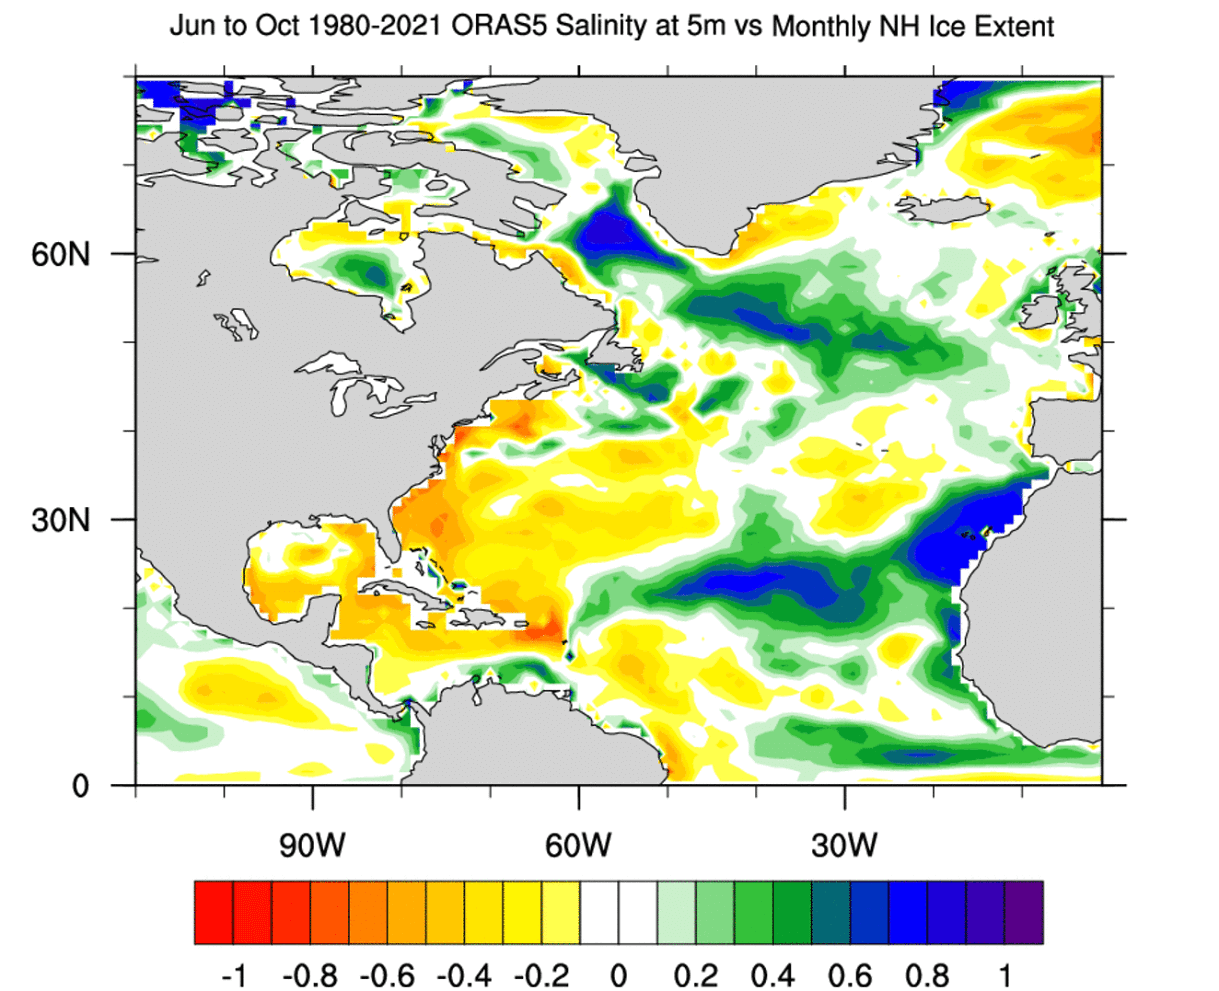 gulf-stream-collapse-signal-north-atlantic-ocean-salinity-freshening-melting-ice-surface-salinity-trend-ecmwf